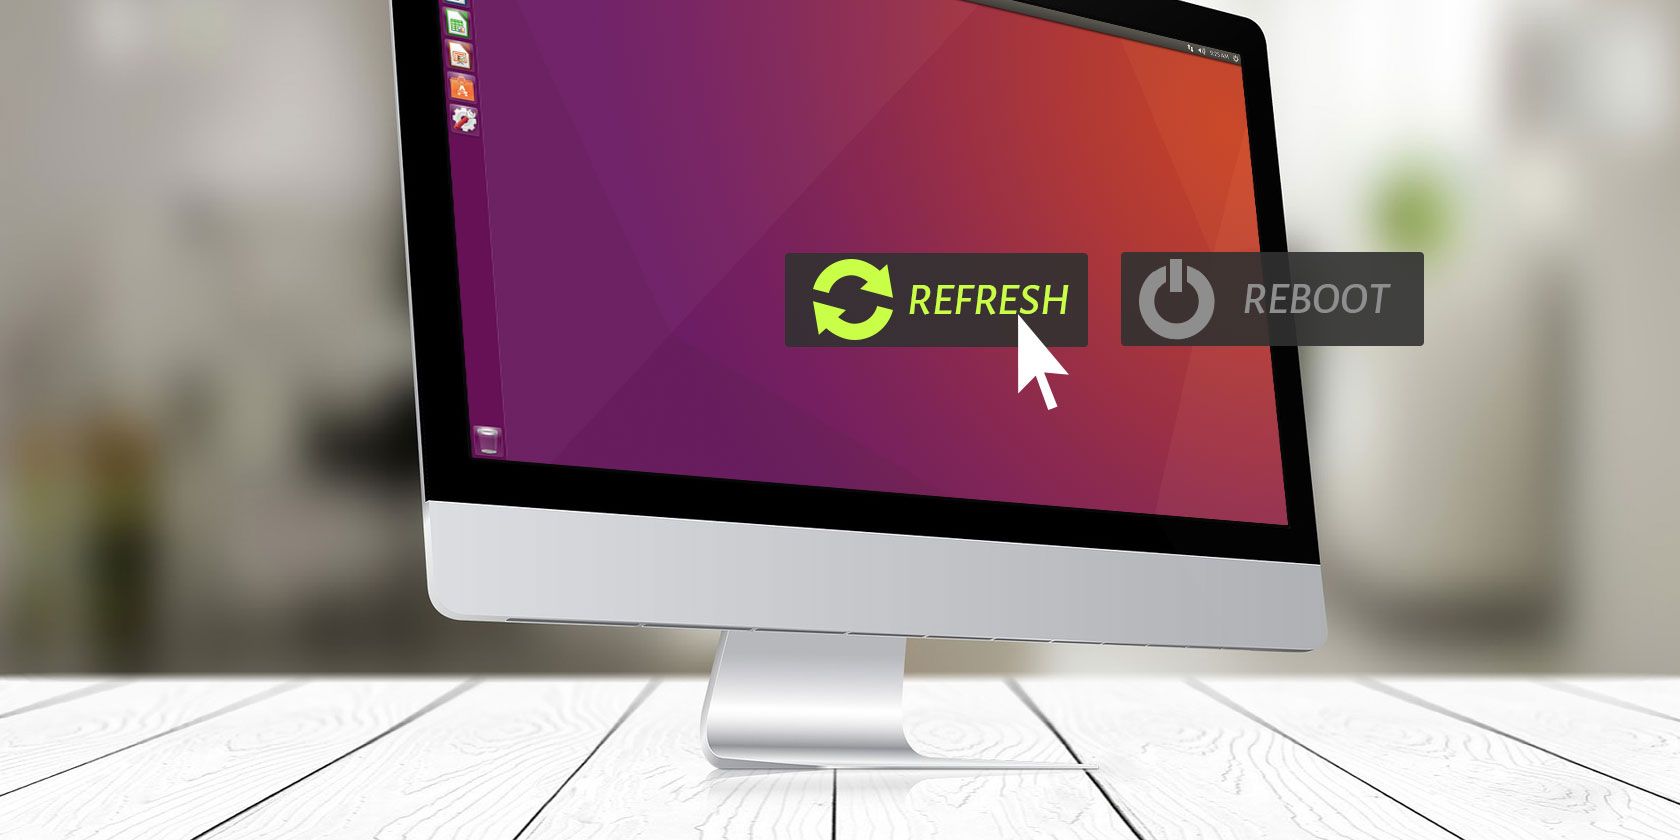 linux-refresh-not-reboot